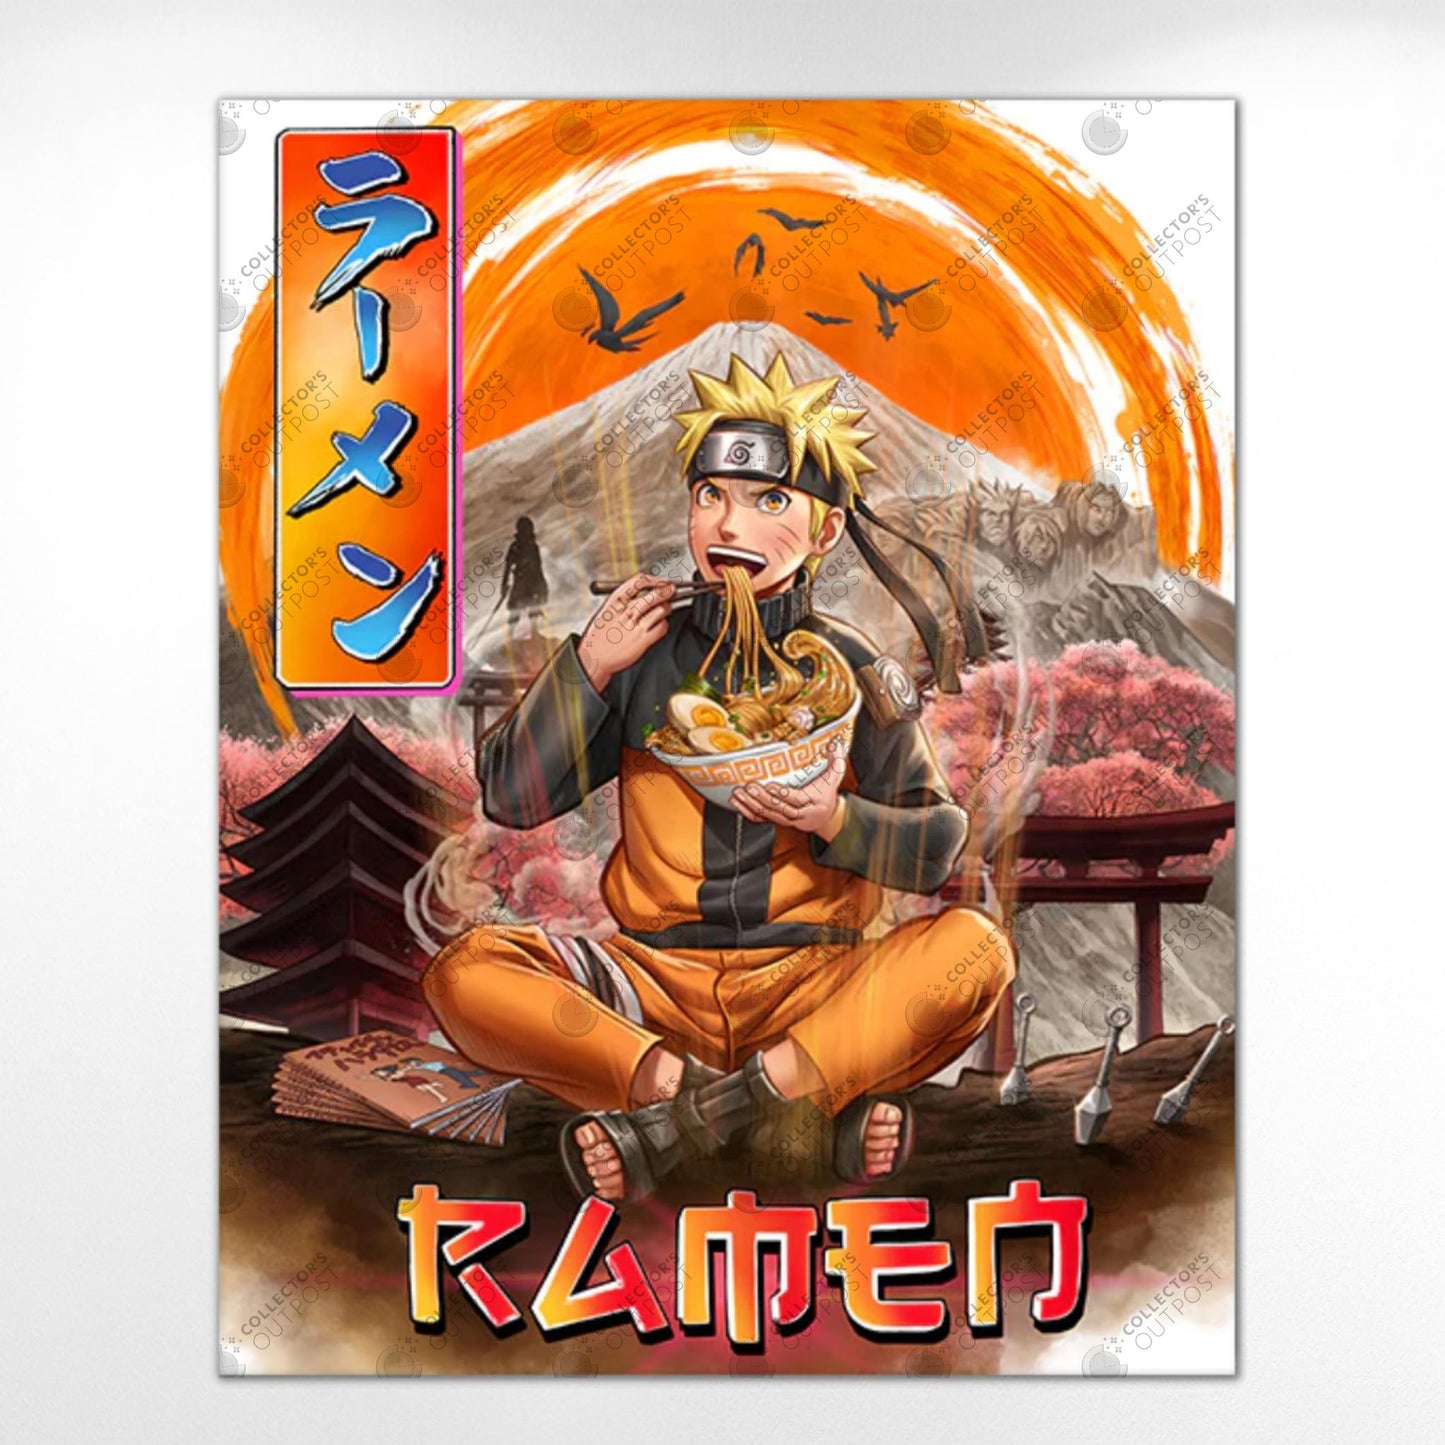 Obito Uchiha (Naruto Shippuden) Premium Art Print – Collector's